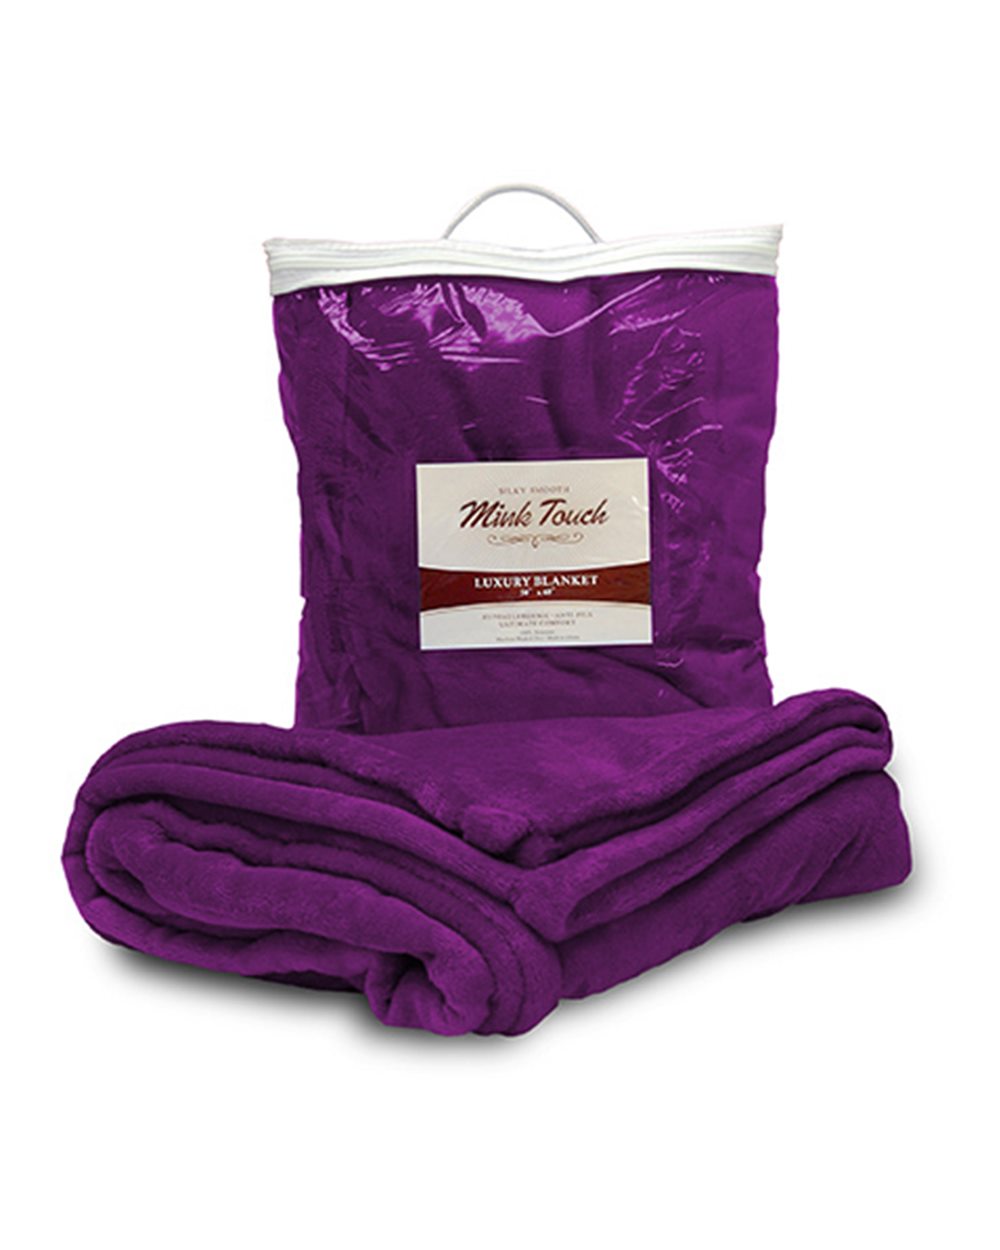 Alpine Fleece - Mink Touch Luxury Blanket - 8721